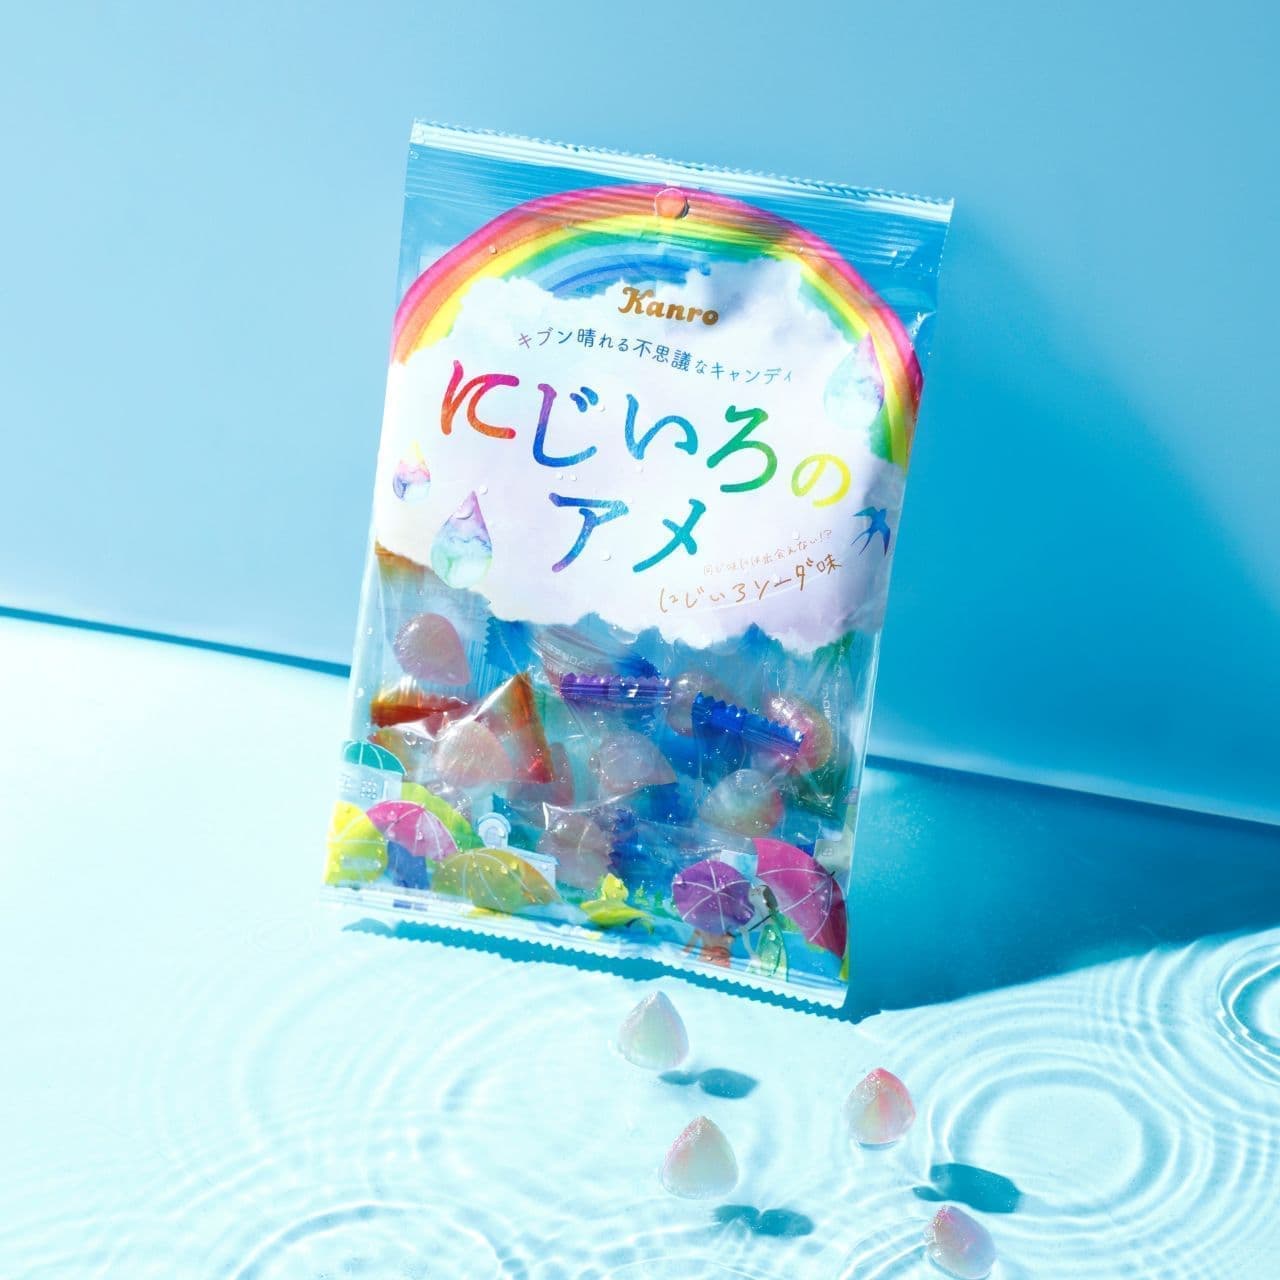 Kanro "Nijiro no Ame" (candy in rainbow colors)